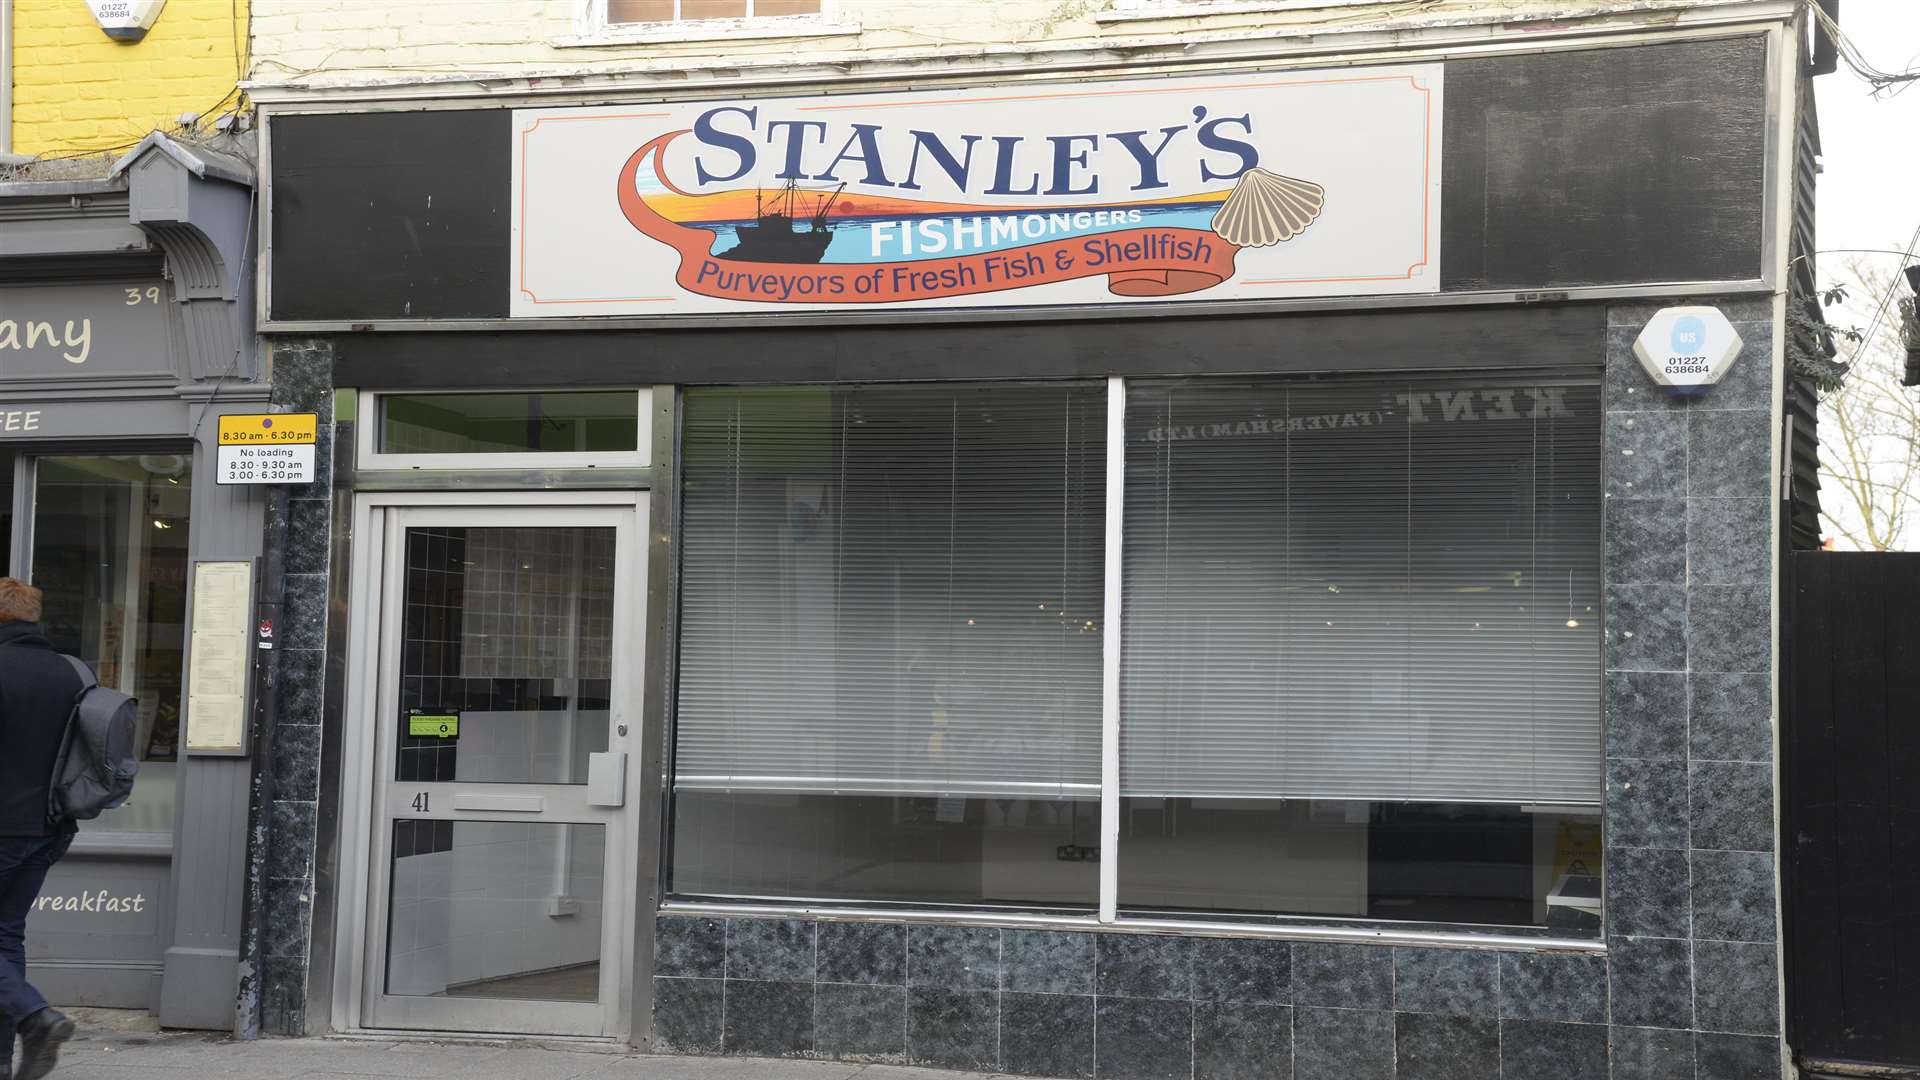 The former Stanley’s Fishmonger in Whitstable High Street